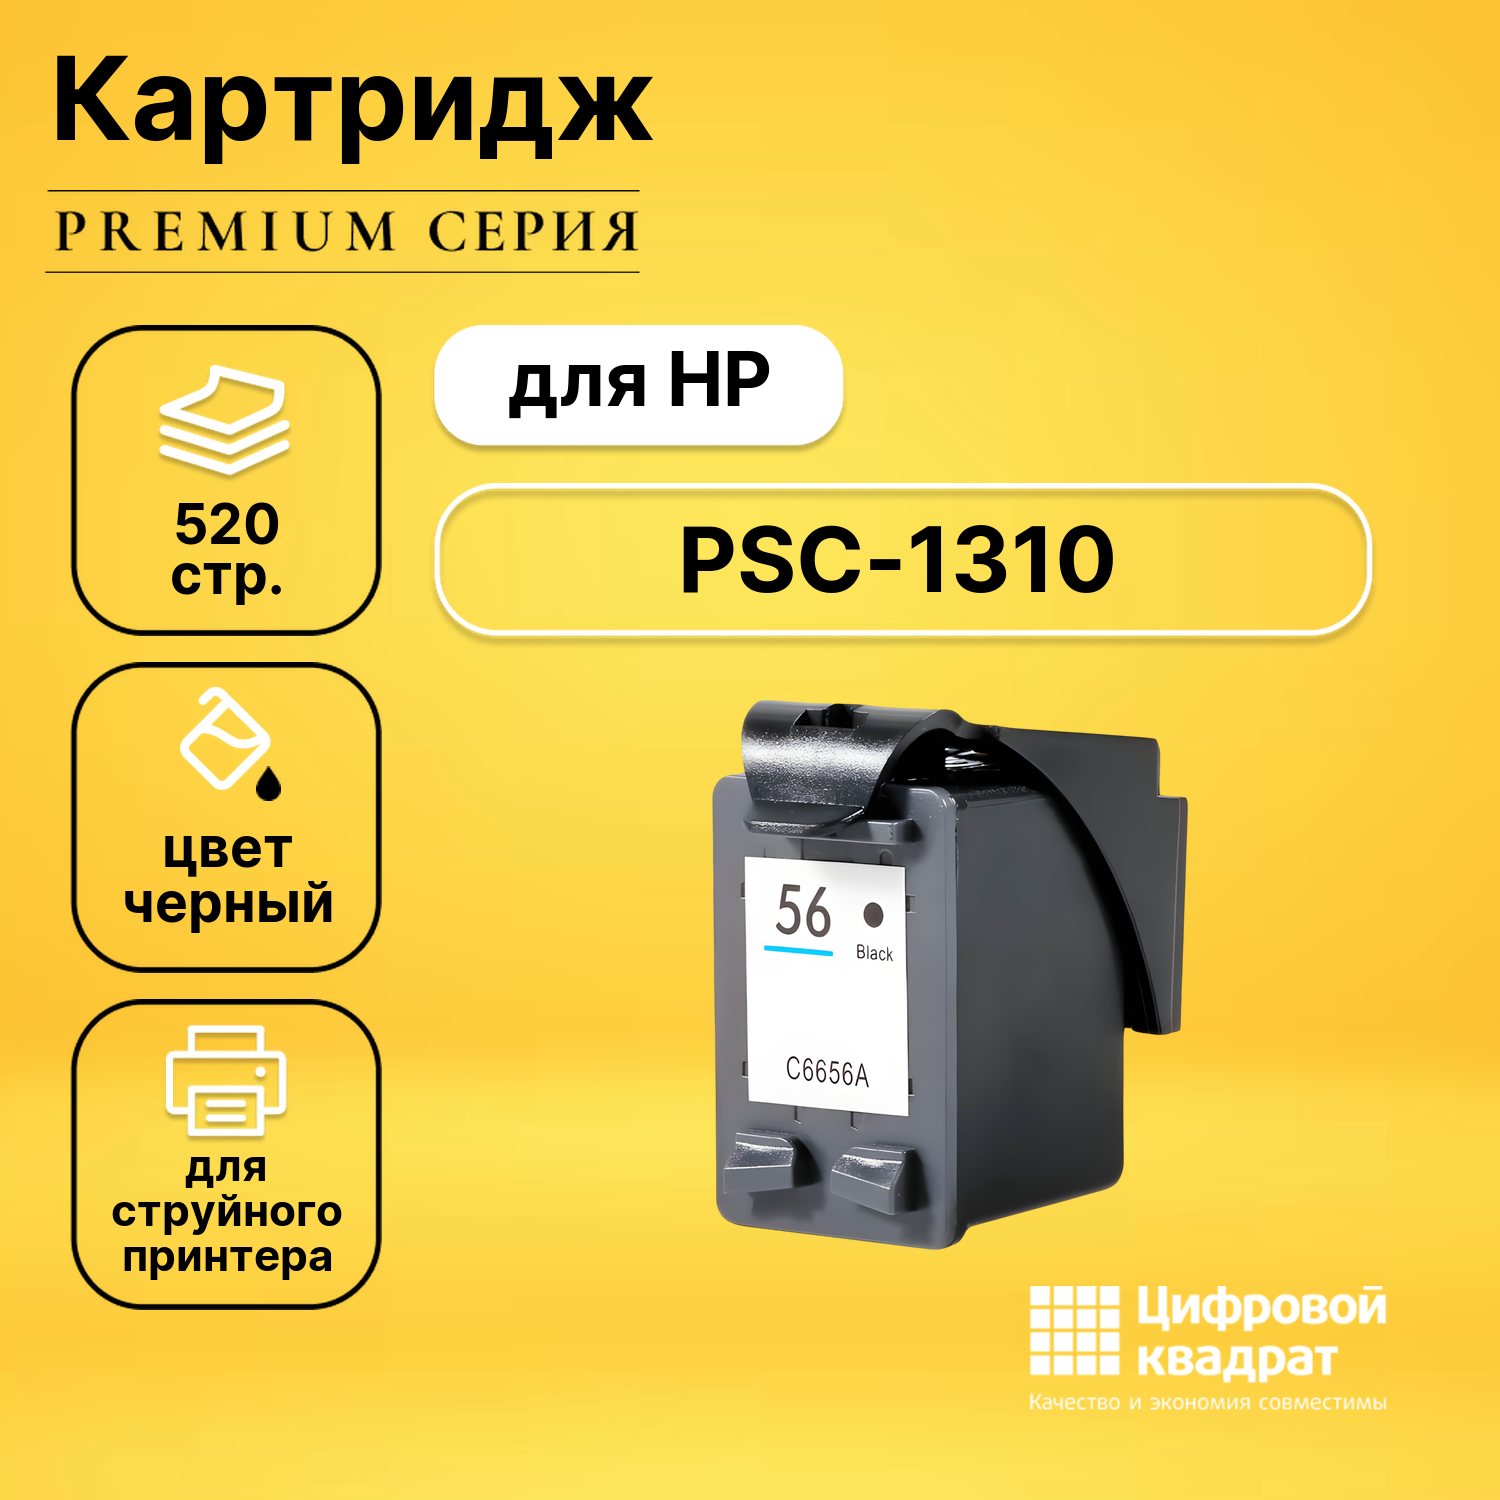 Картридж DS для HP PSC-1310 совместимый